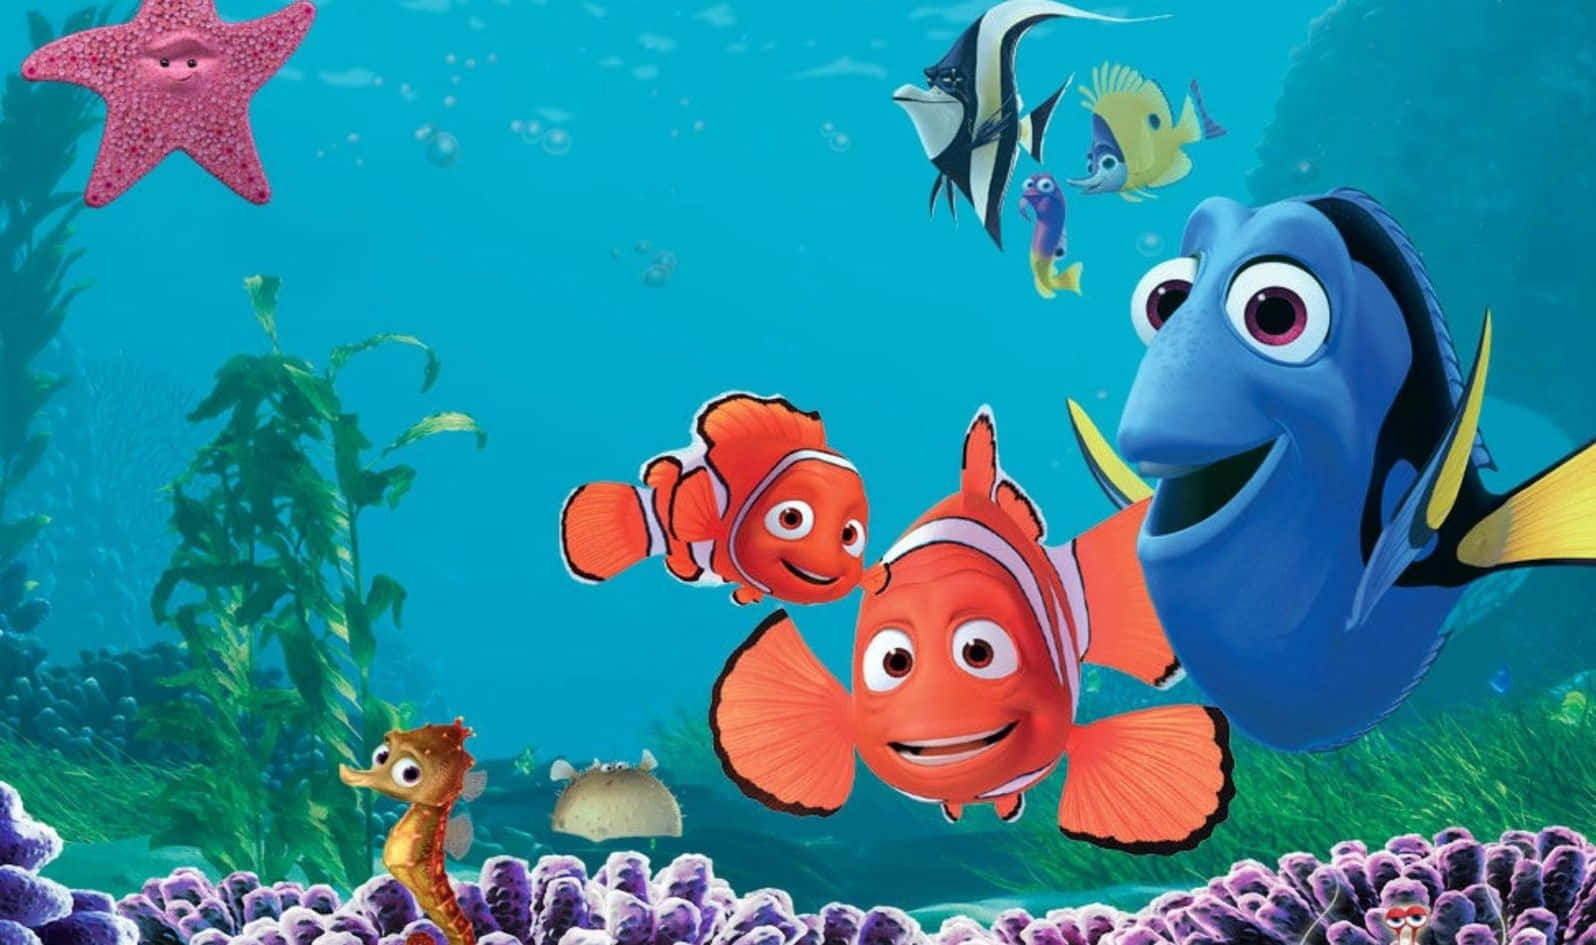 Caption: Immersive Underwater Adventure with Finding Nemo Characters